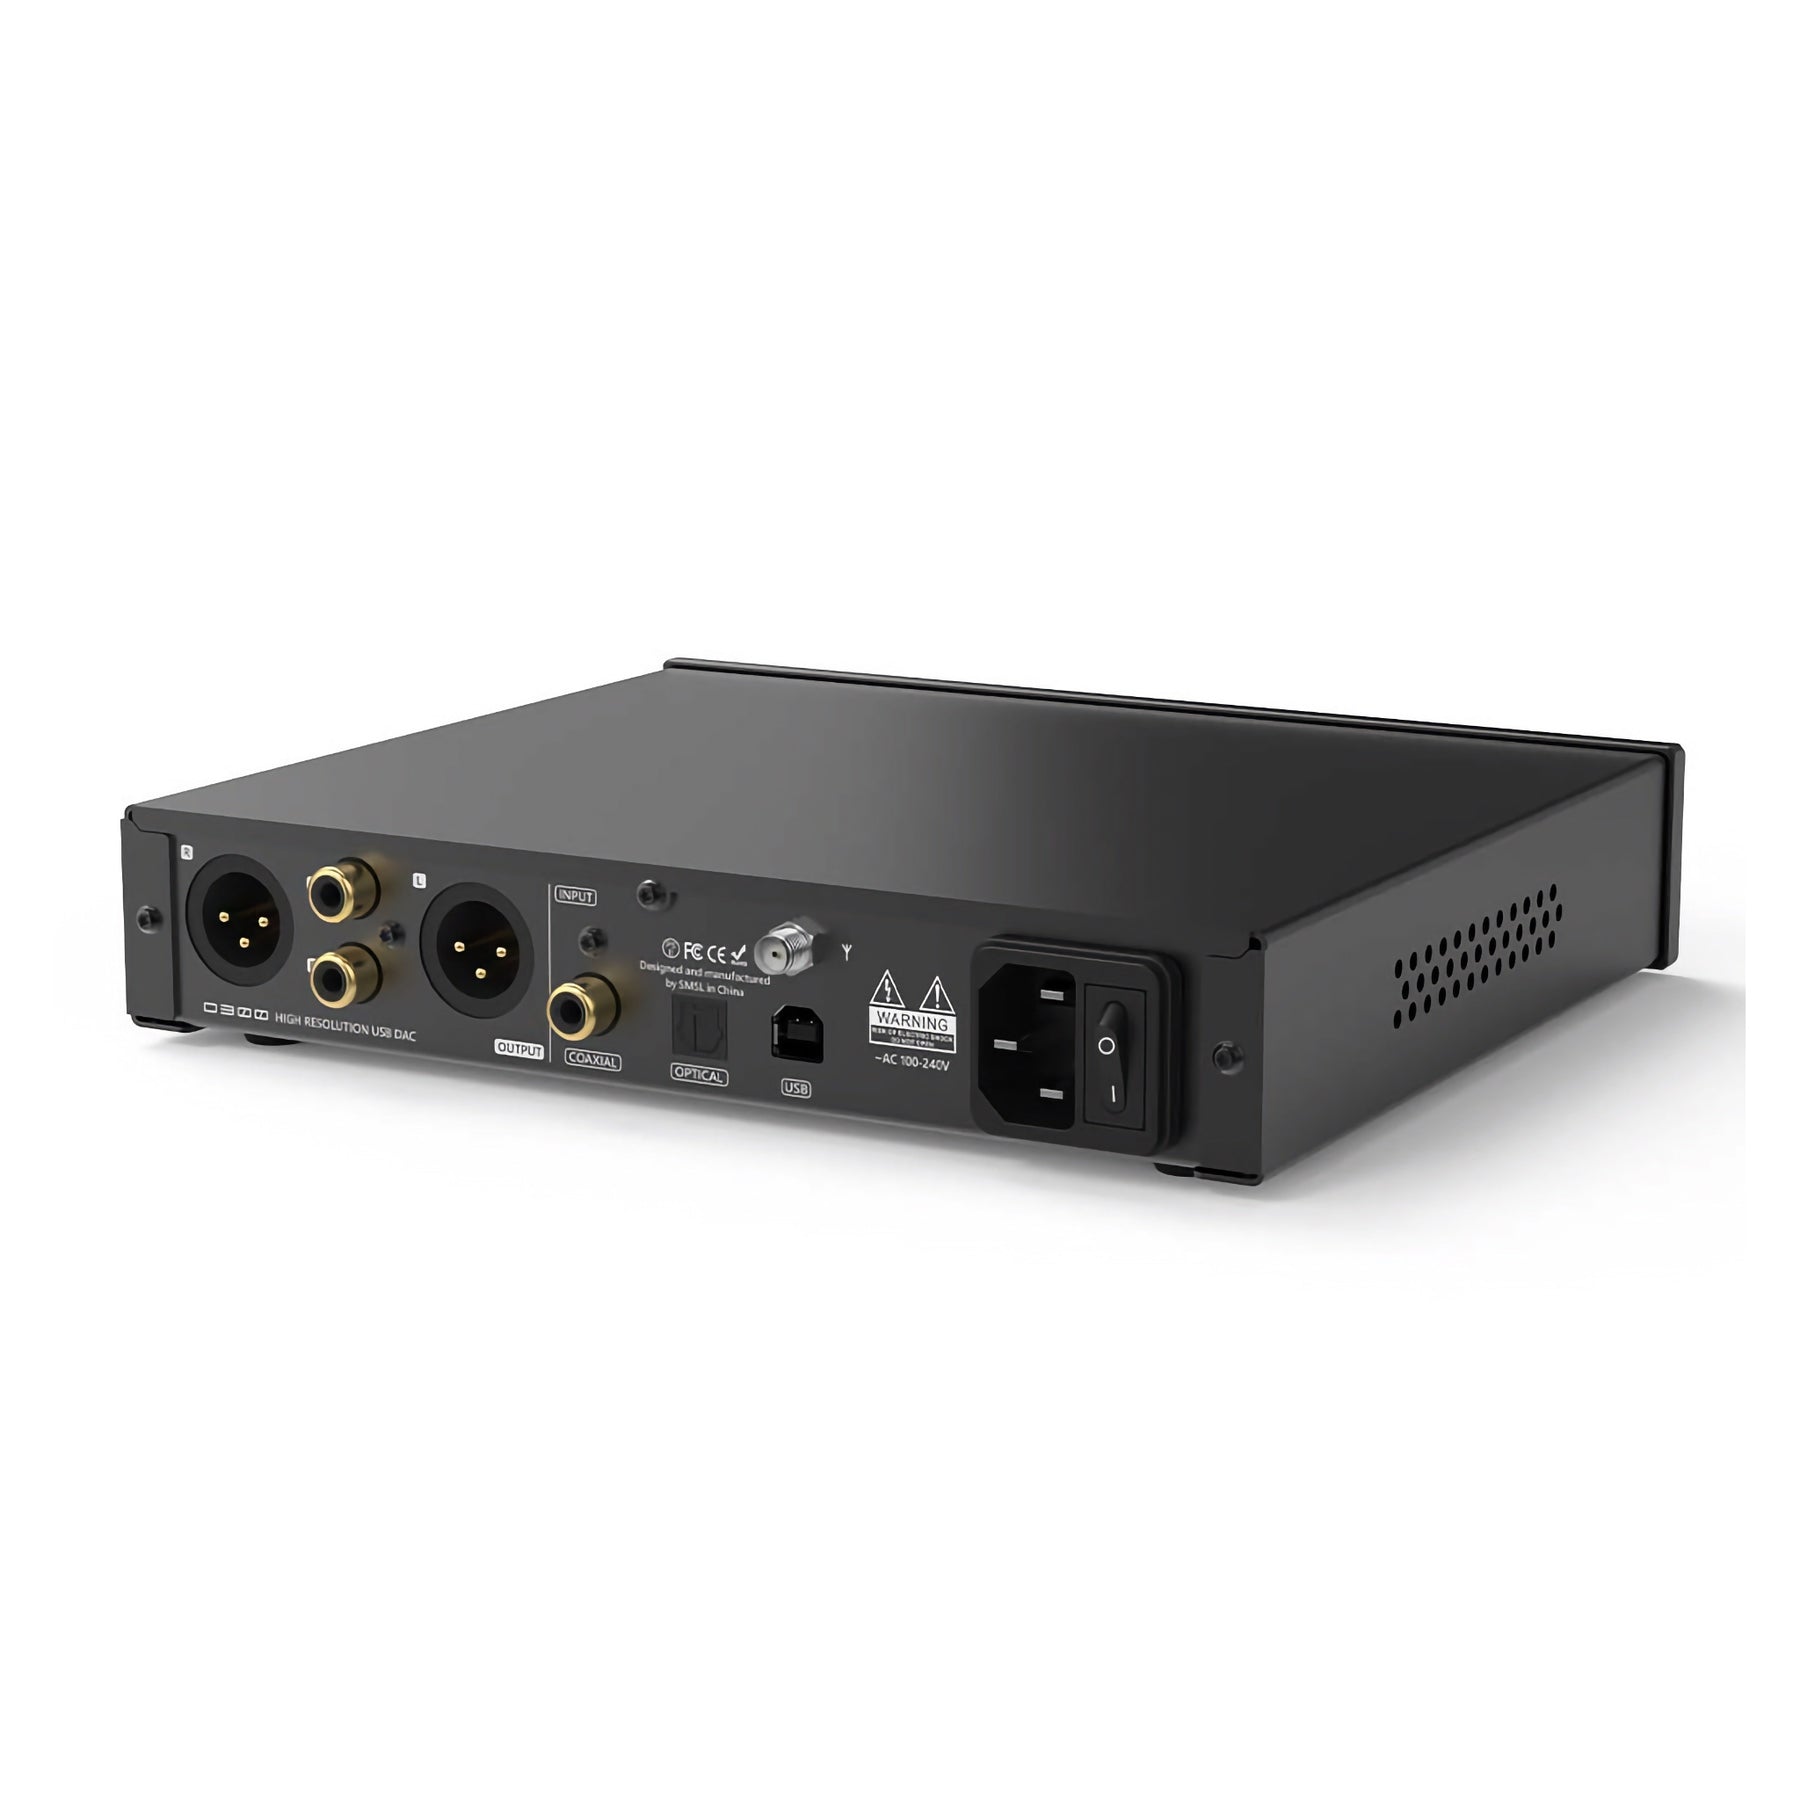 SMSL D300 | USB Bluetooth Desktop DAC